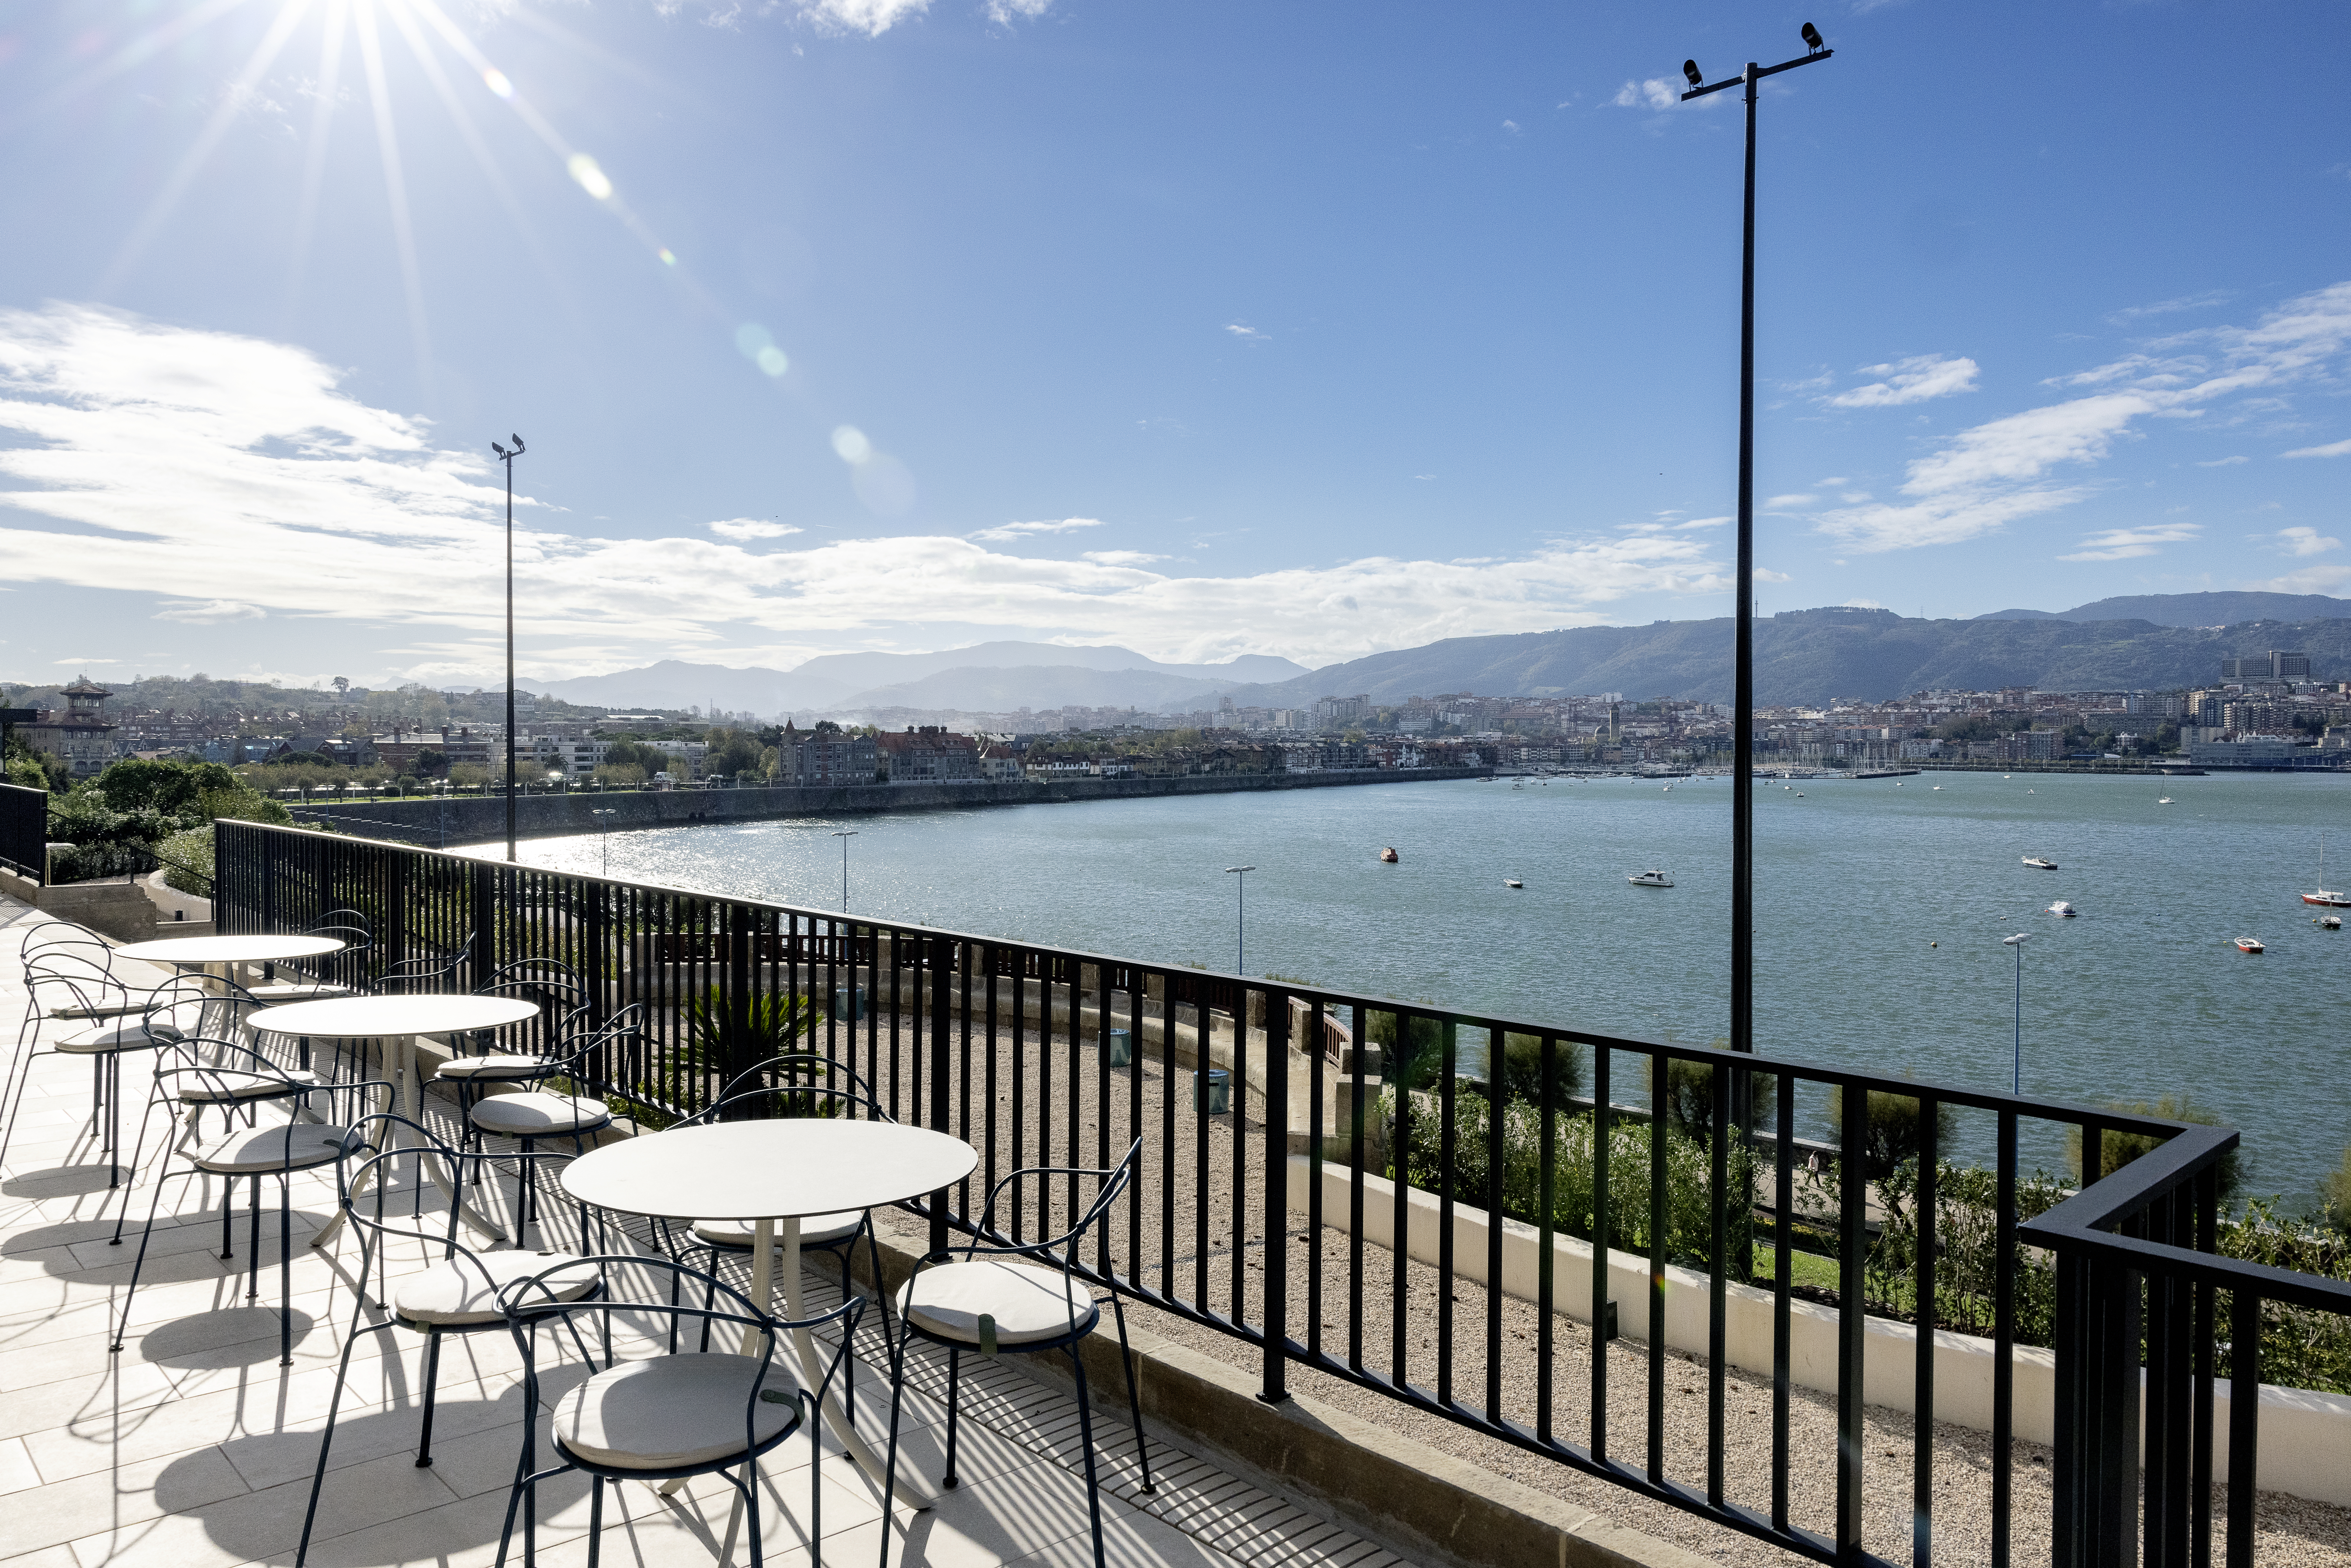 11 palacio arrriluce hotel lujo bilbao getxo terraza vistas mar cantabrico